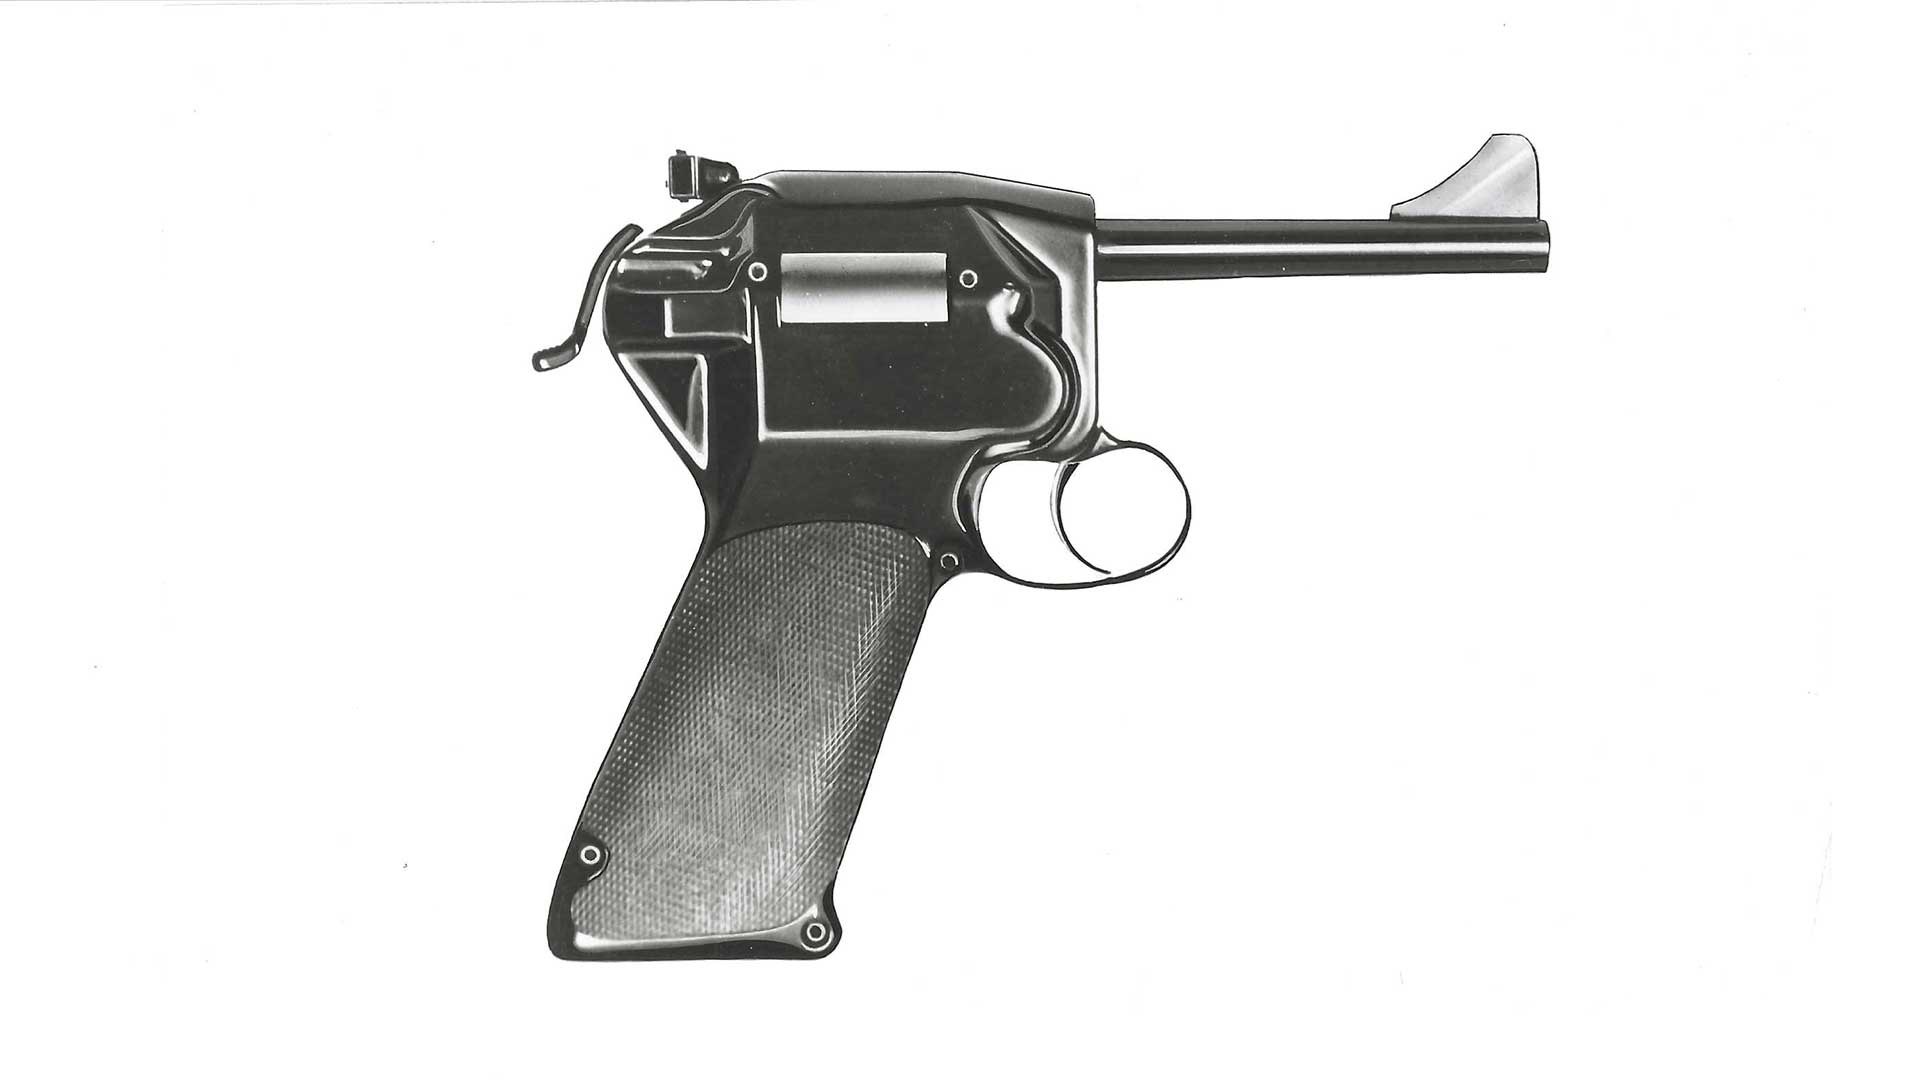 Right side of the Dardick pistol.